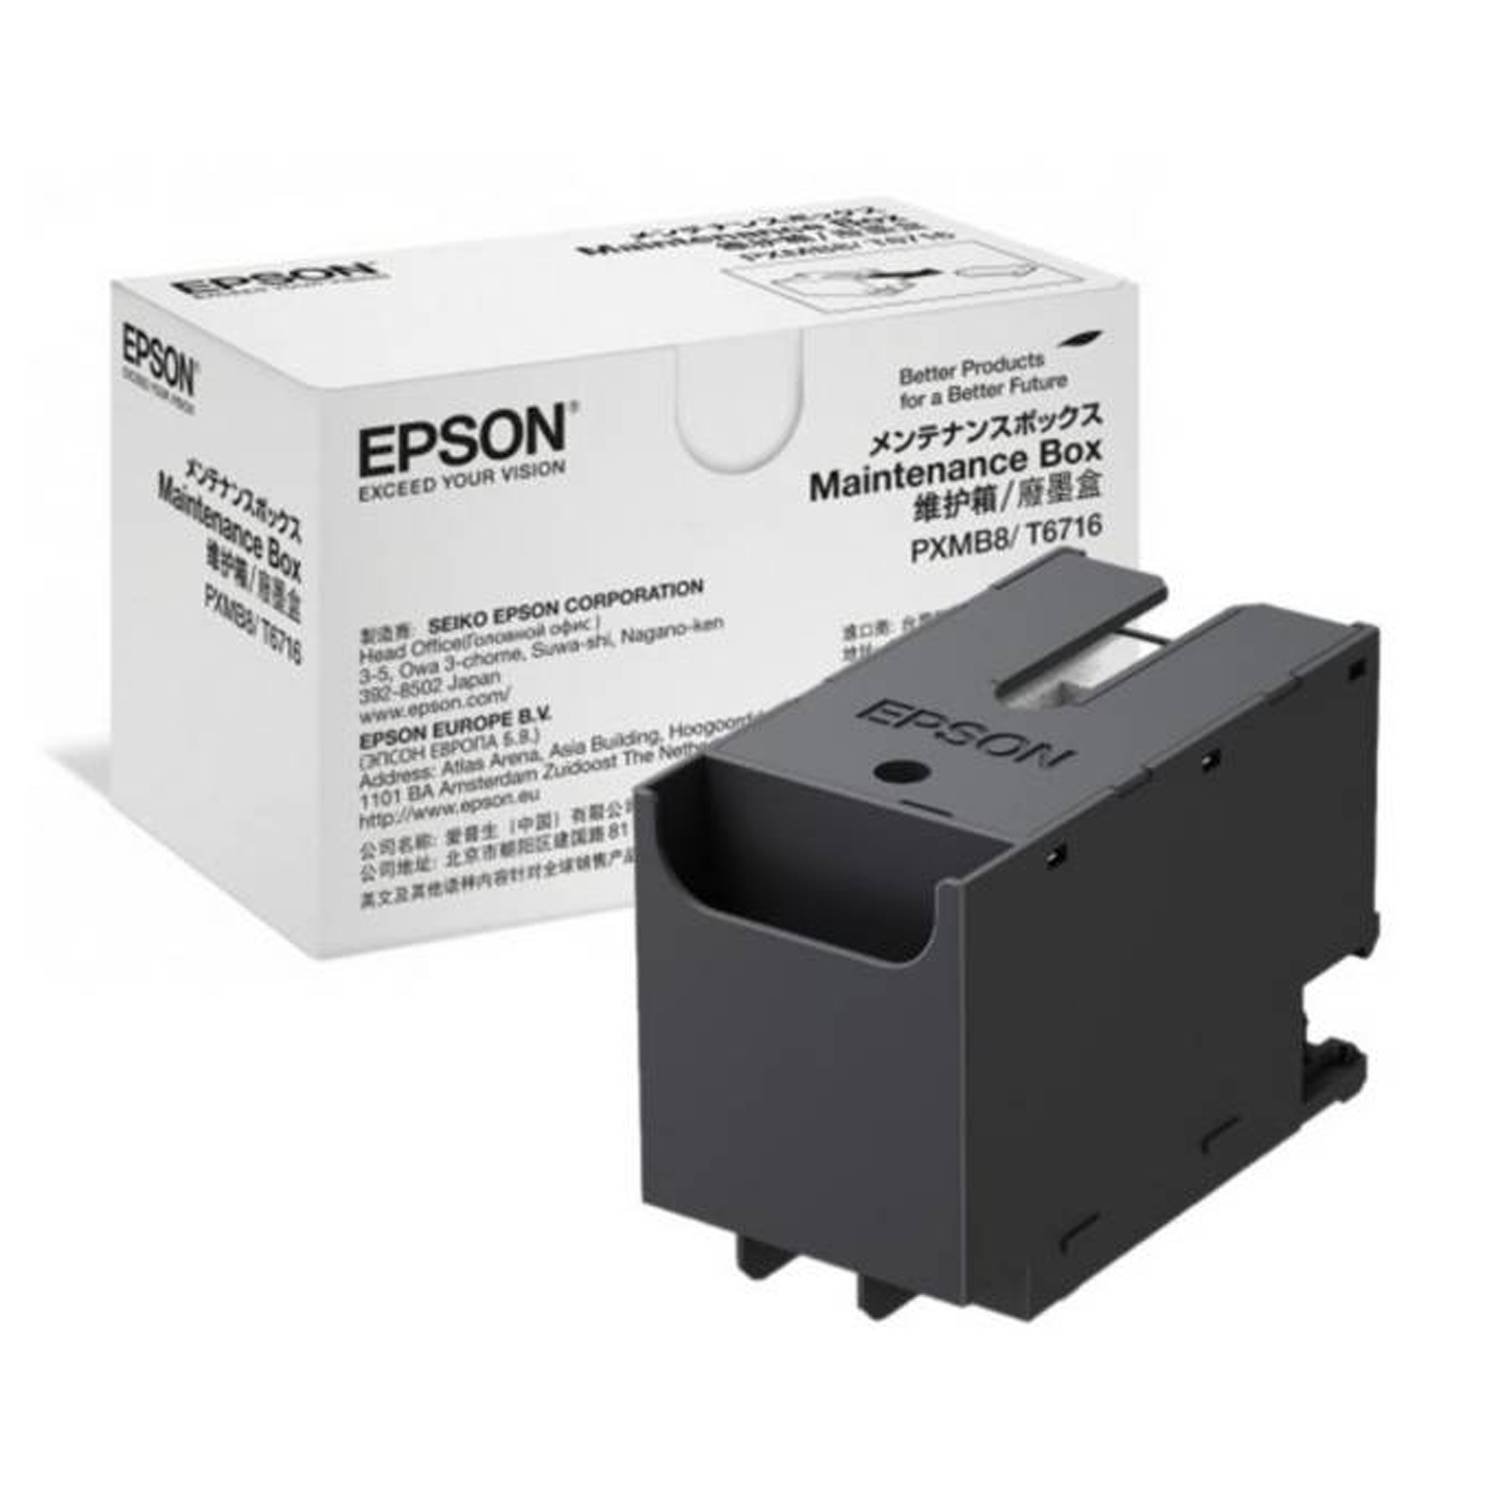 Epson WorkForce WF C5210/90 WF C5710/90 Maintenance Box